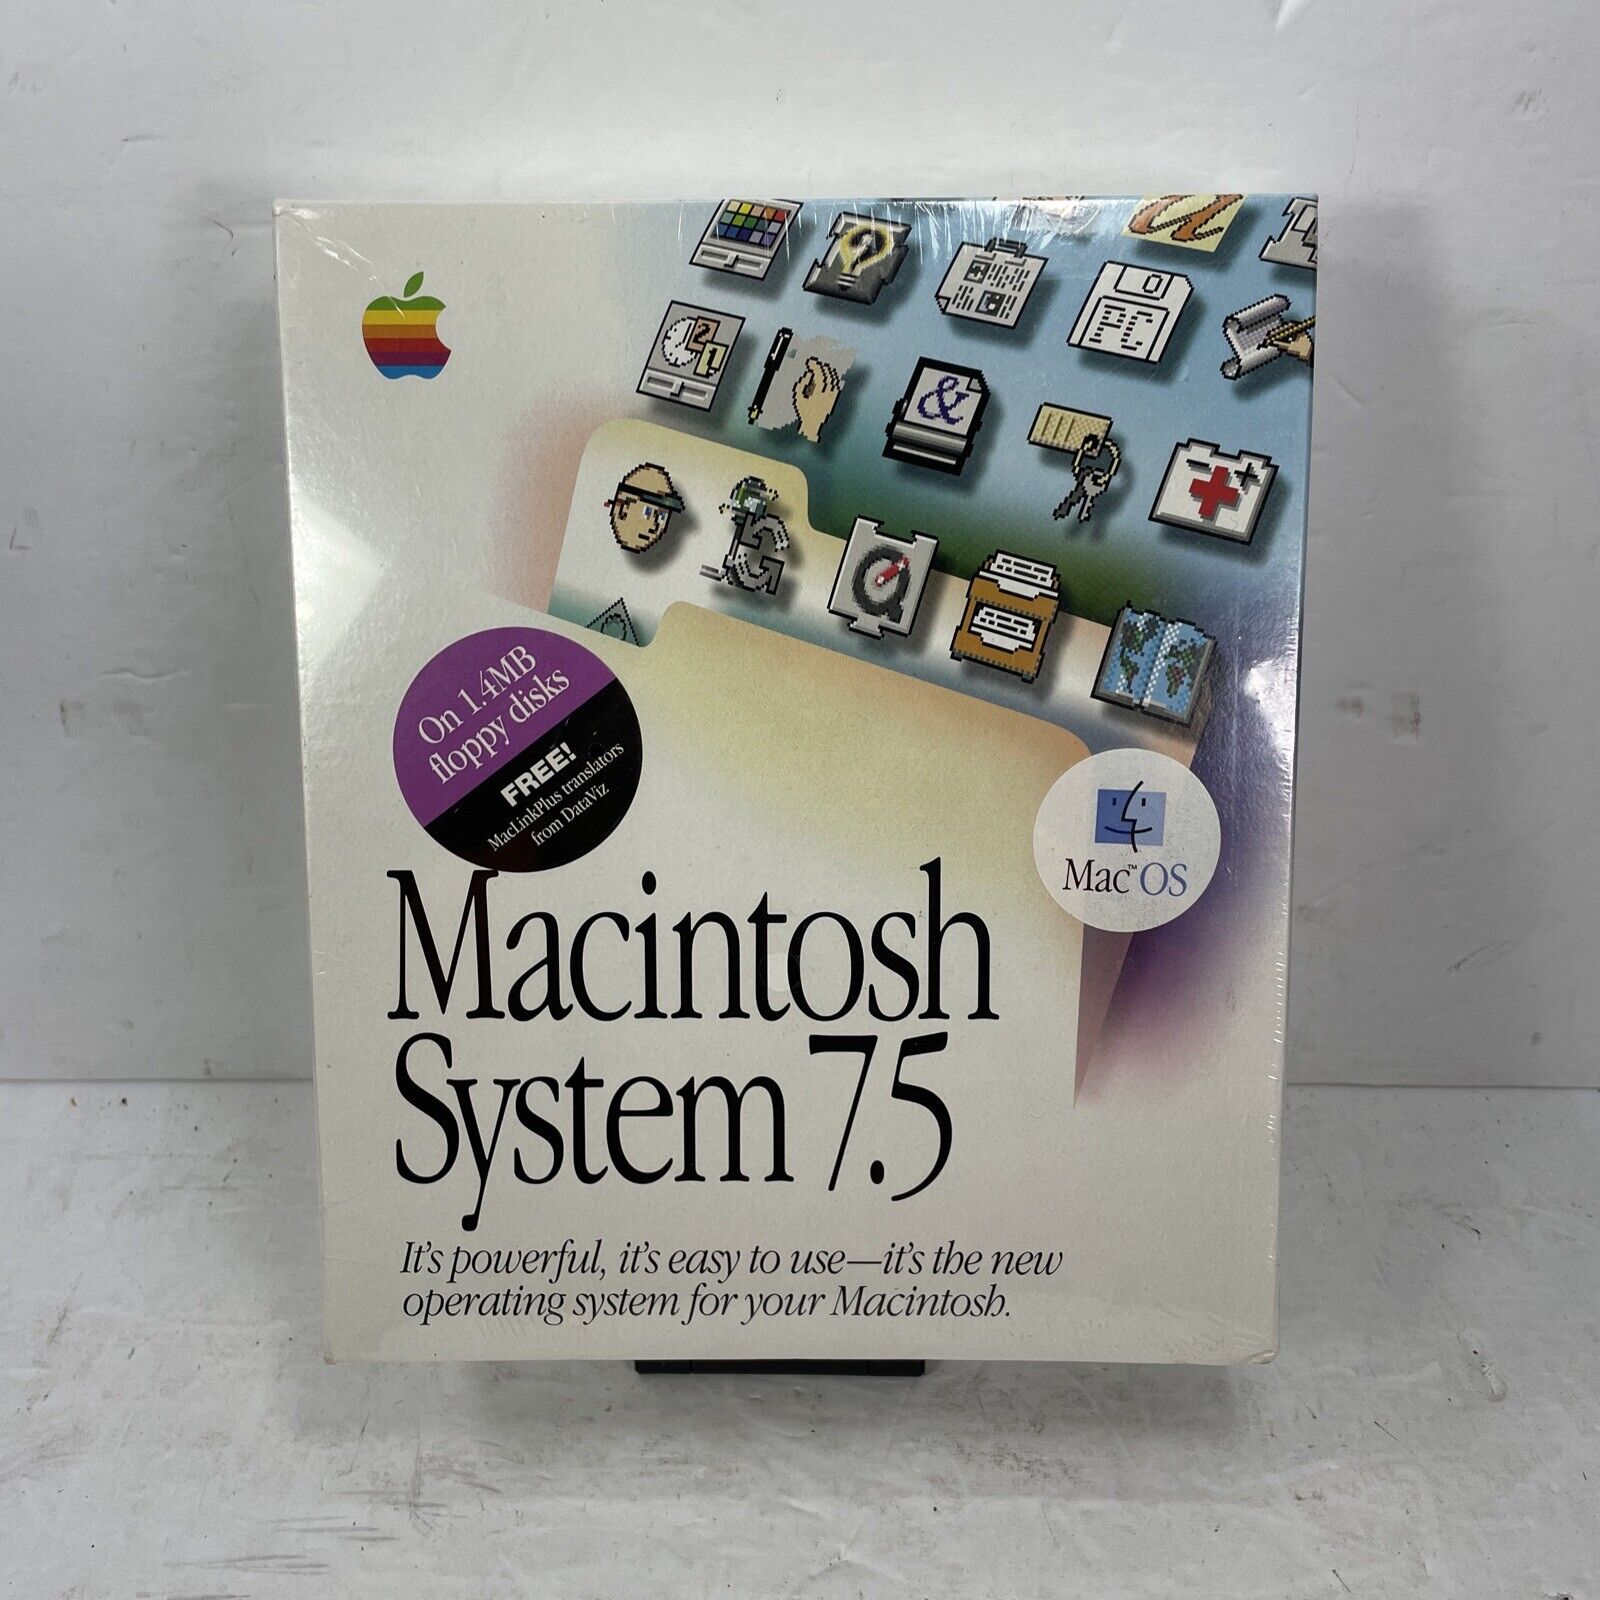 NOS Vintage 1994 Macintosh System 7.5 Apple Computers Floppy Disk Set NEW SEALED